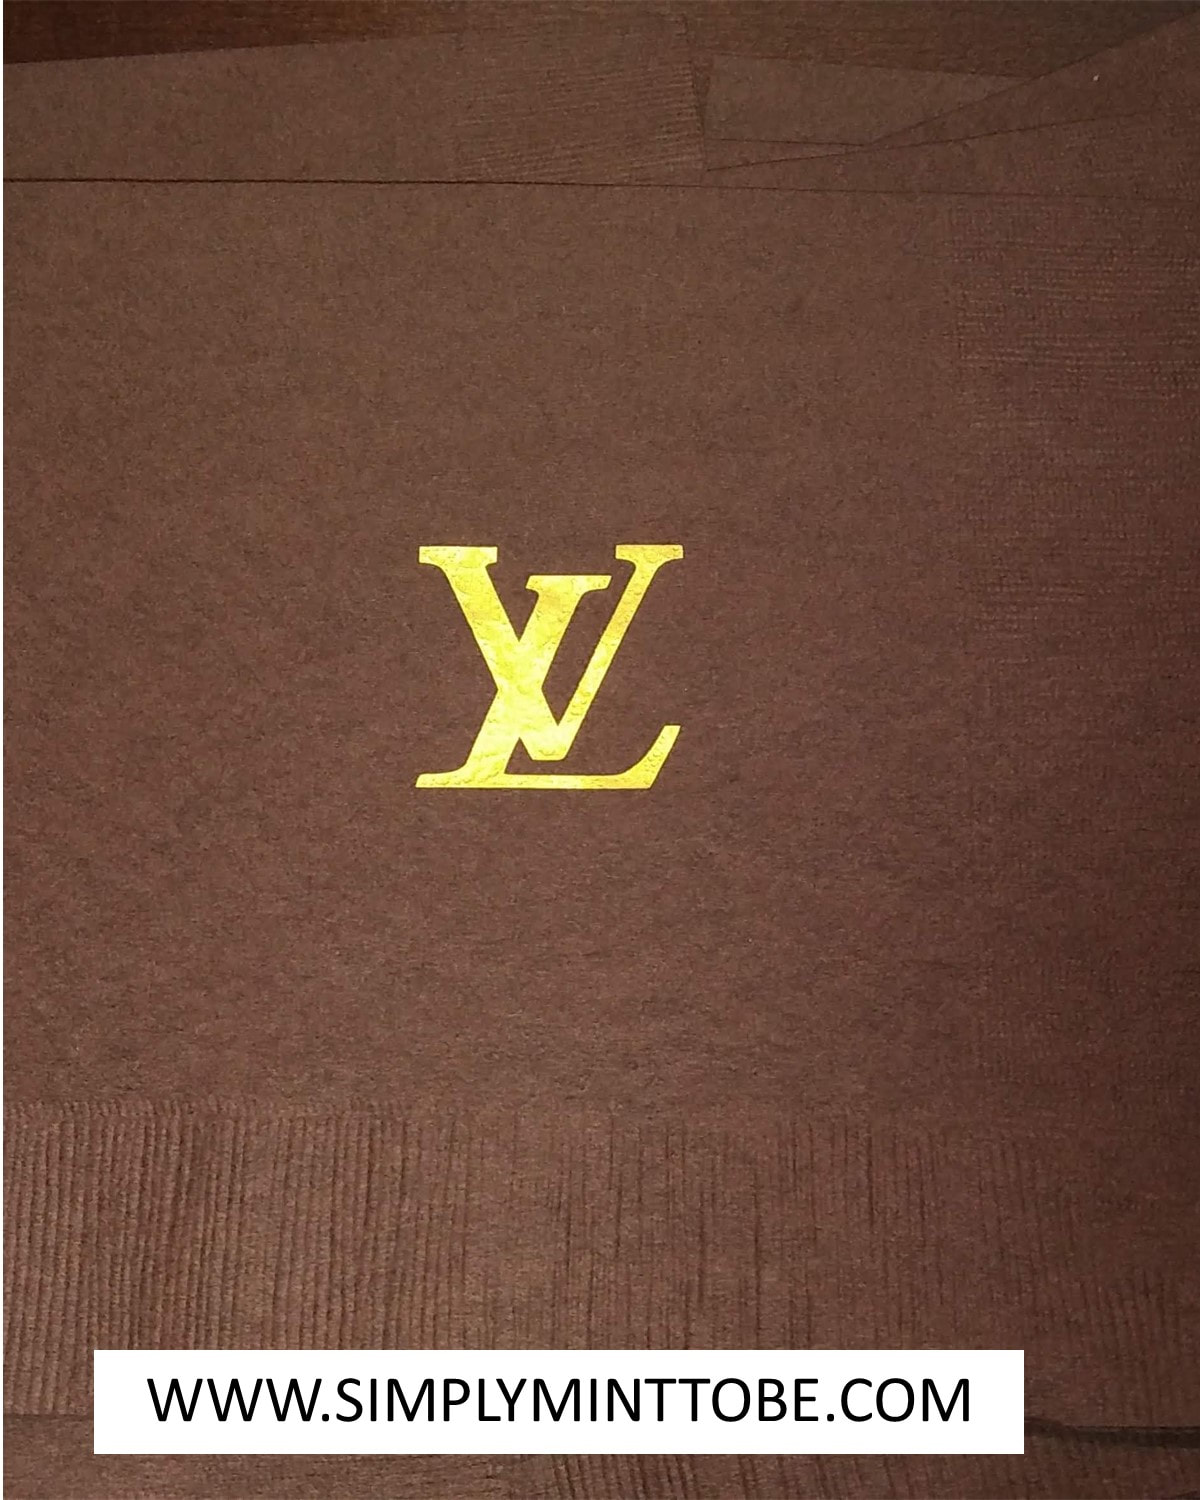 Louis Vuitton Inspired Baby Gift Set